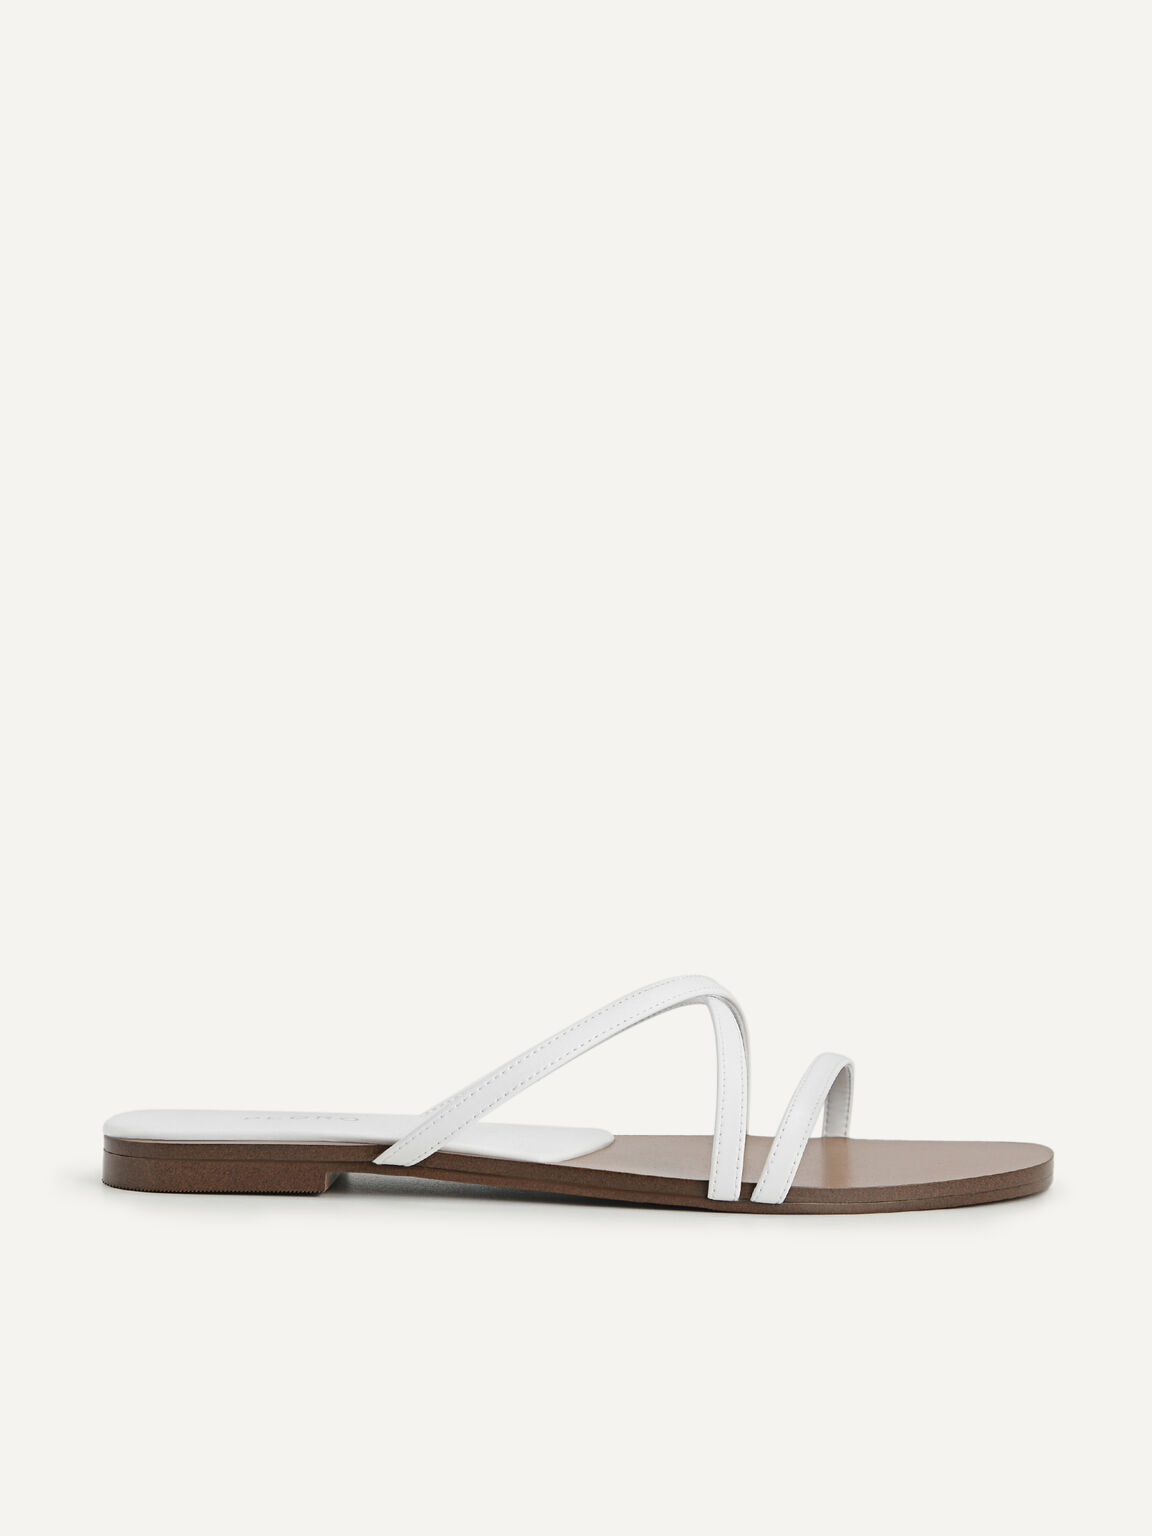 Criss-Cross Strappy Sandals, White